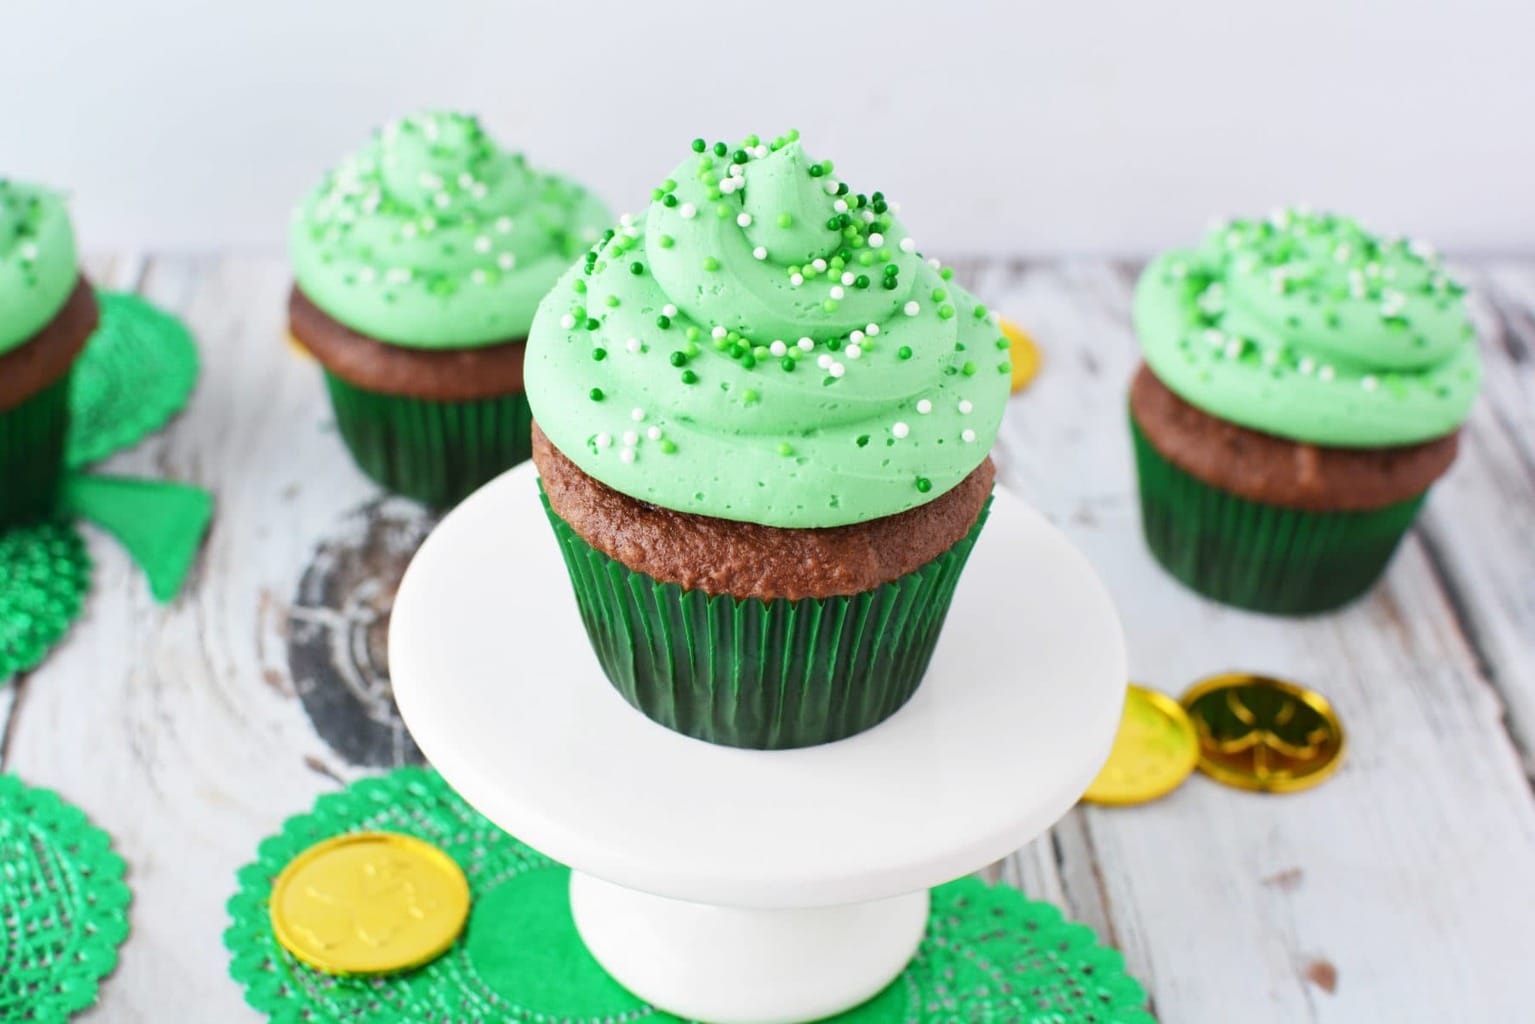 Irish cream cupcakes, bailey's Irish cream cupcakes, Irish cream chocolate cupcakes, cupcakes for st. patties day, St Patricks day recipes